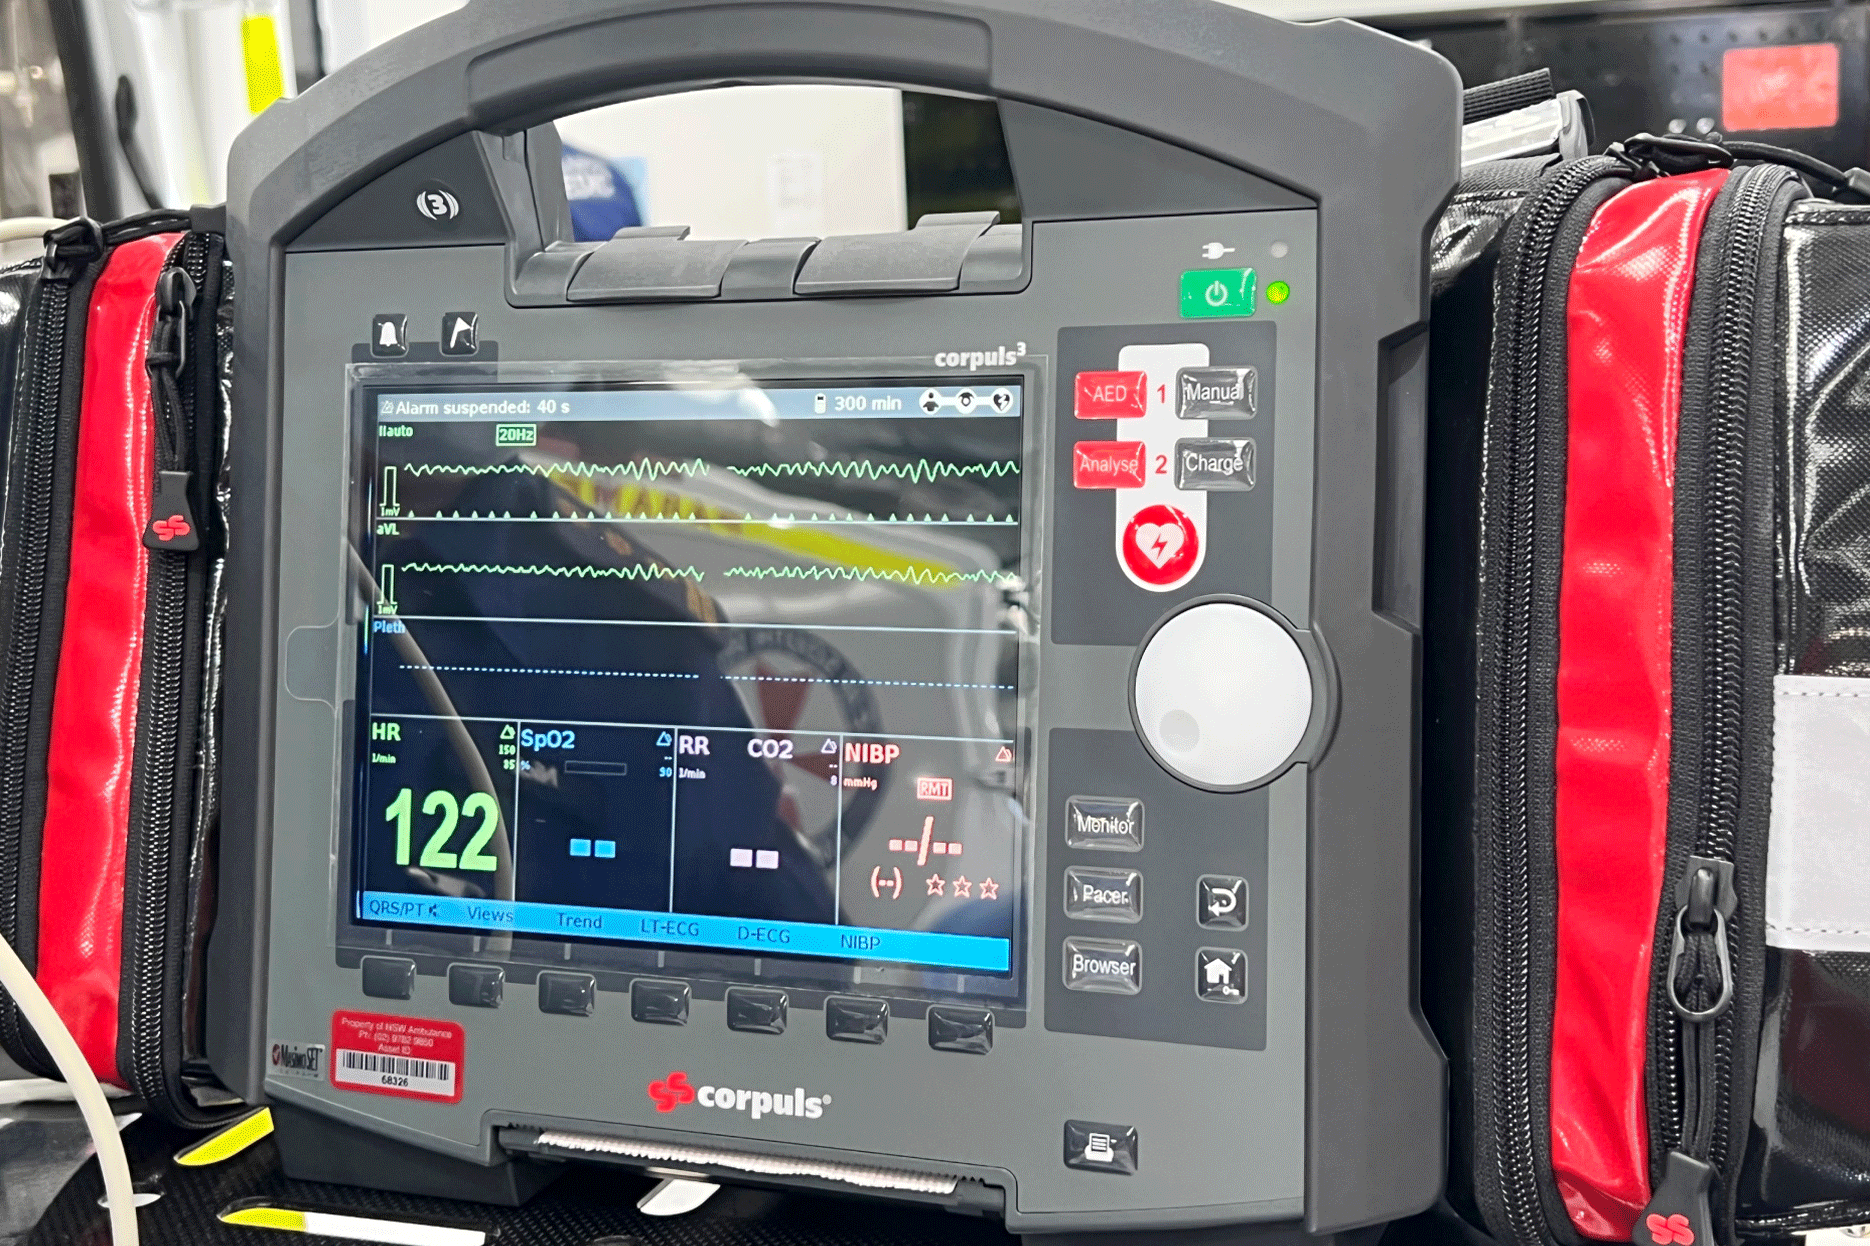 New cardiac monitor/defibrillator device.